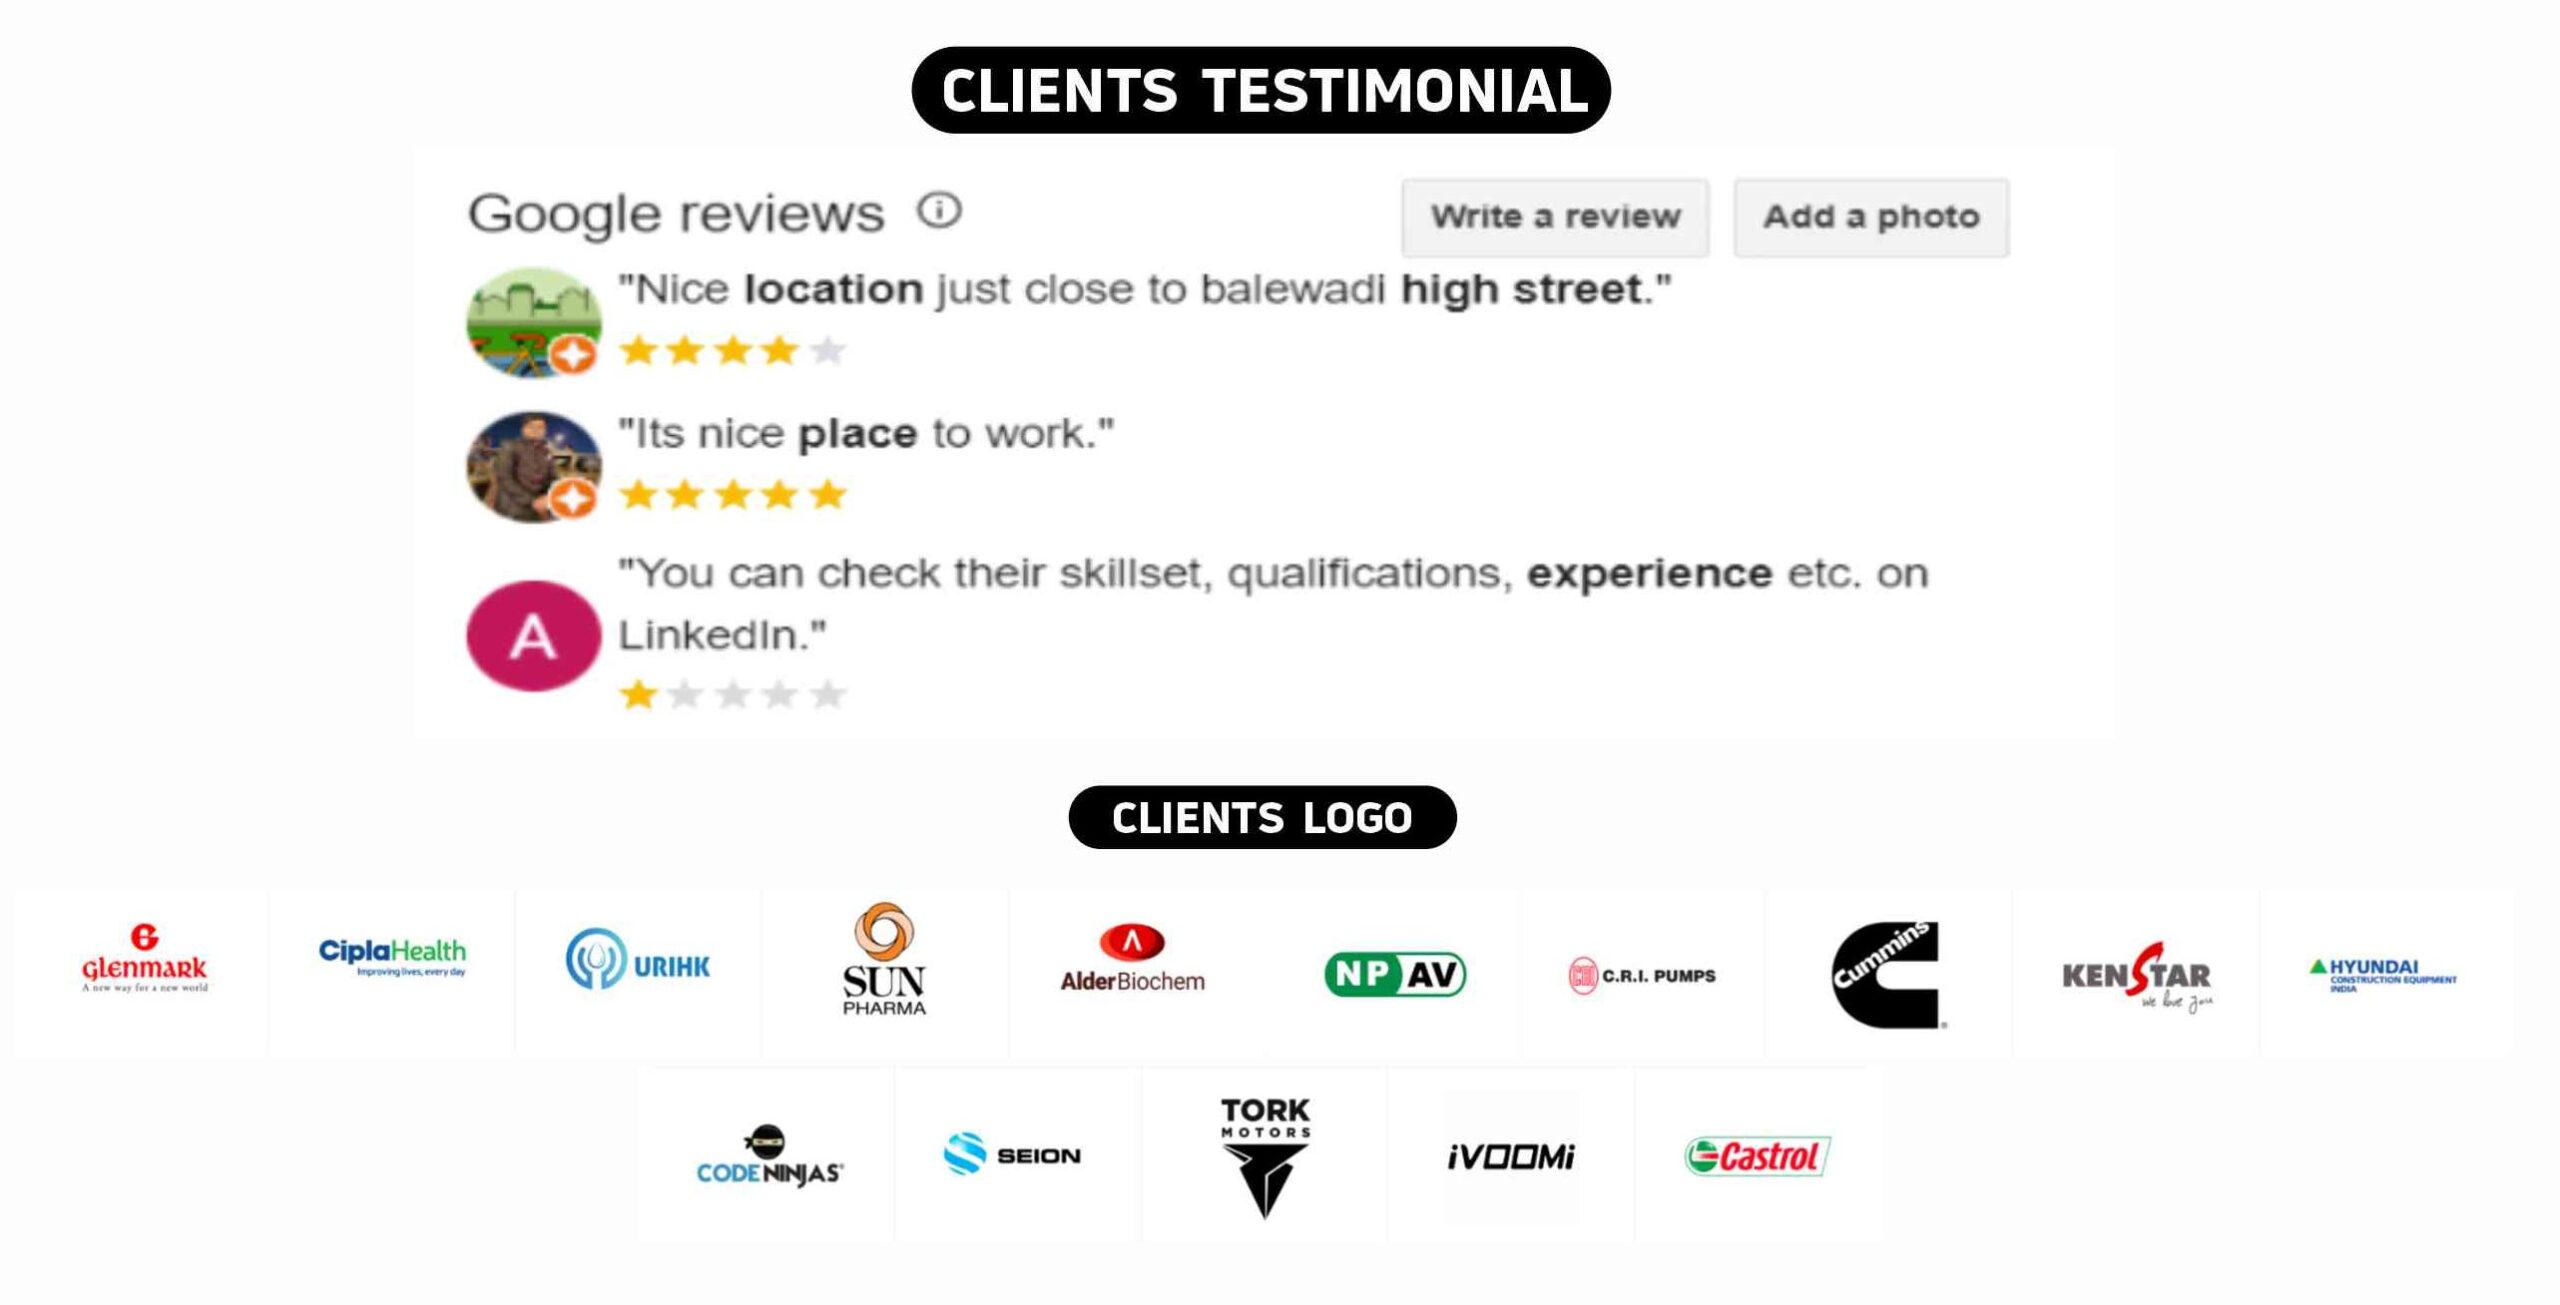 Amura Client testimonial & Logos 